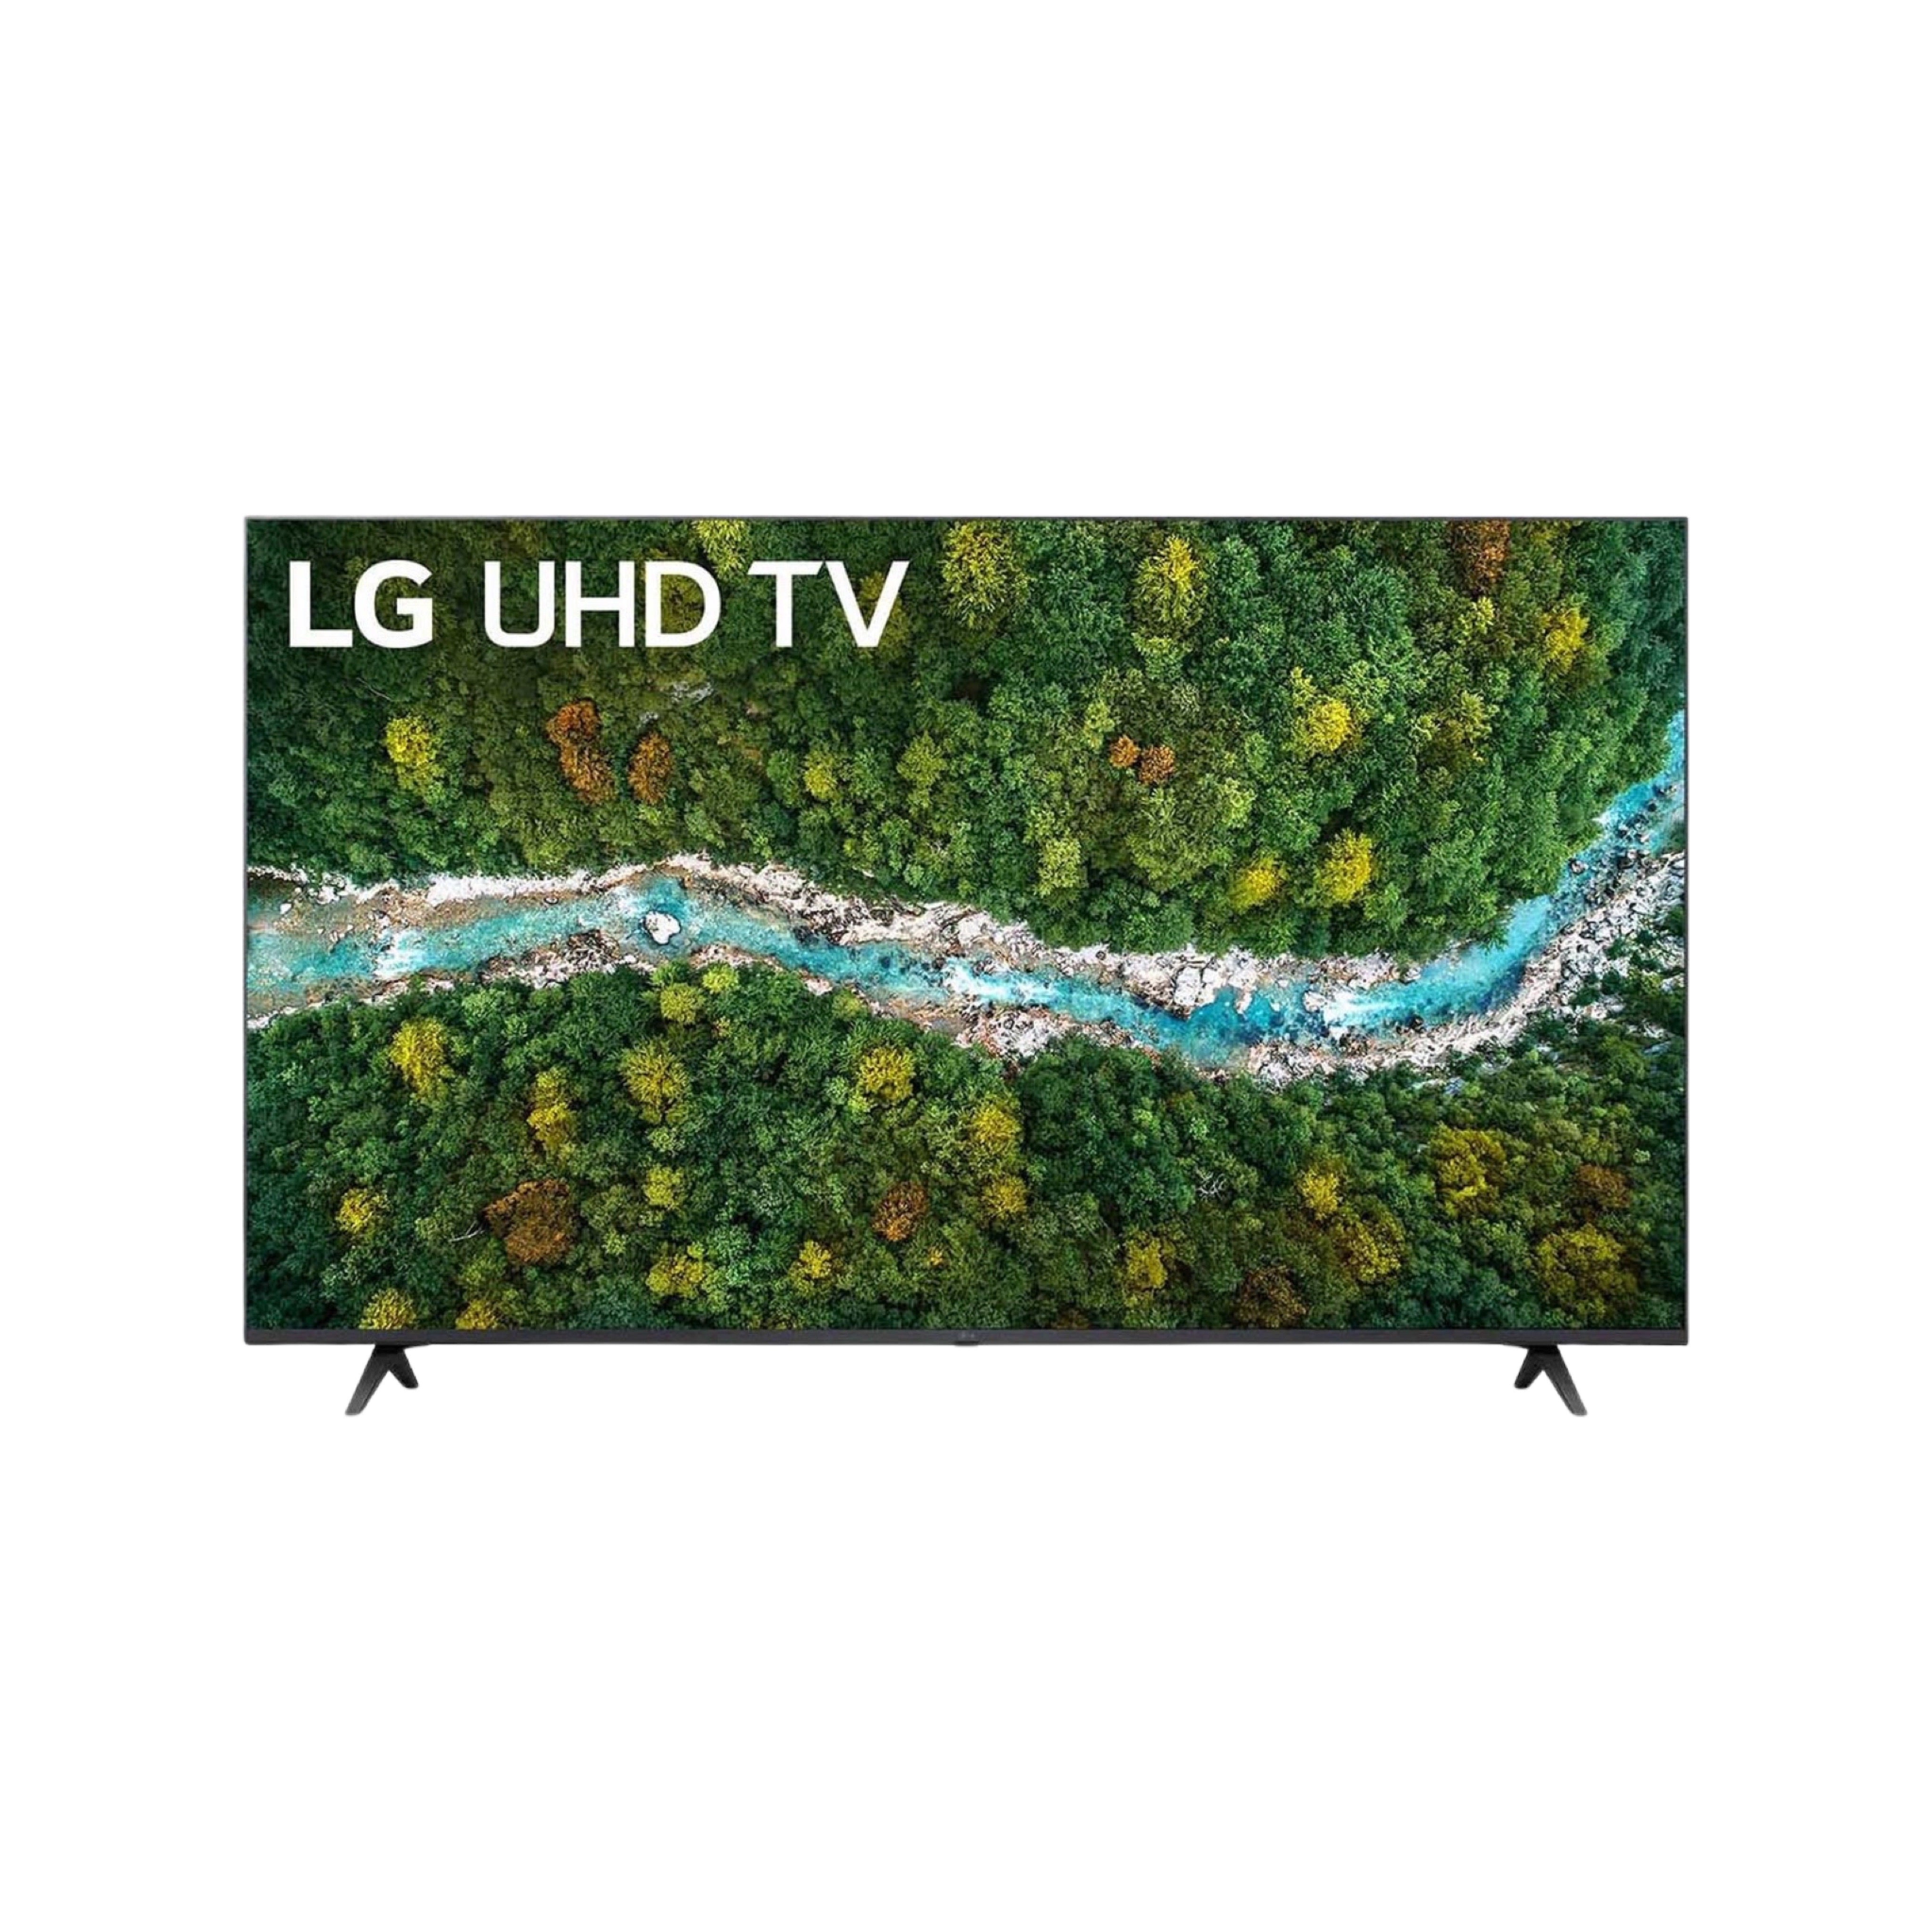 LG UHD 4K TV UP77 Series 